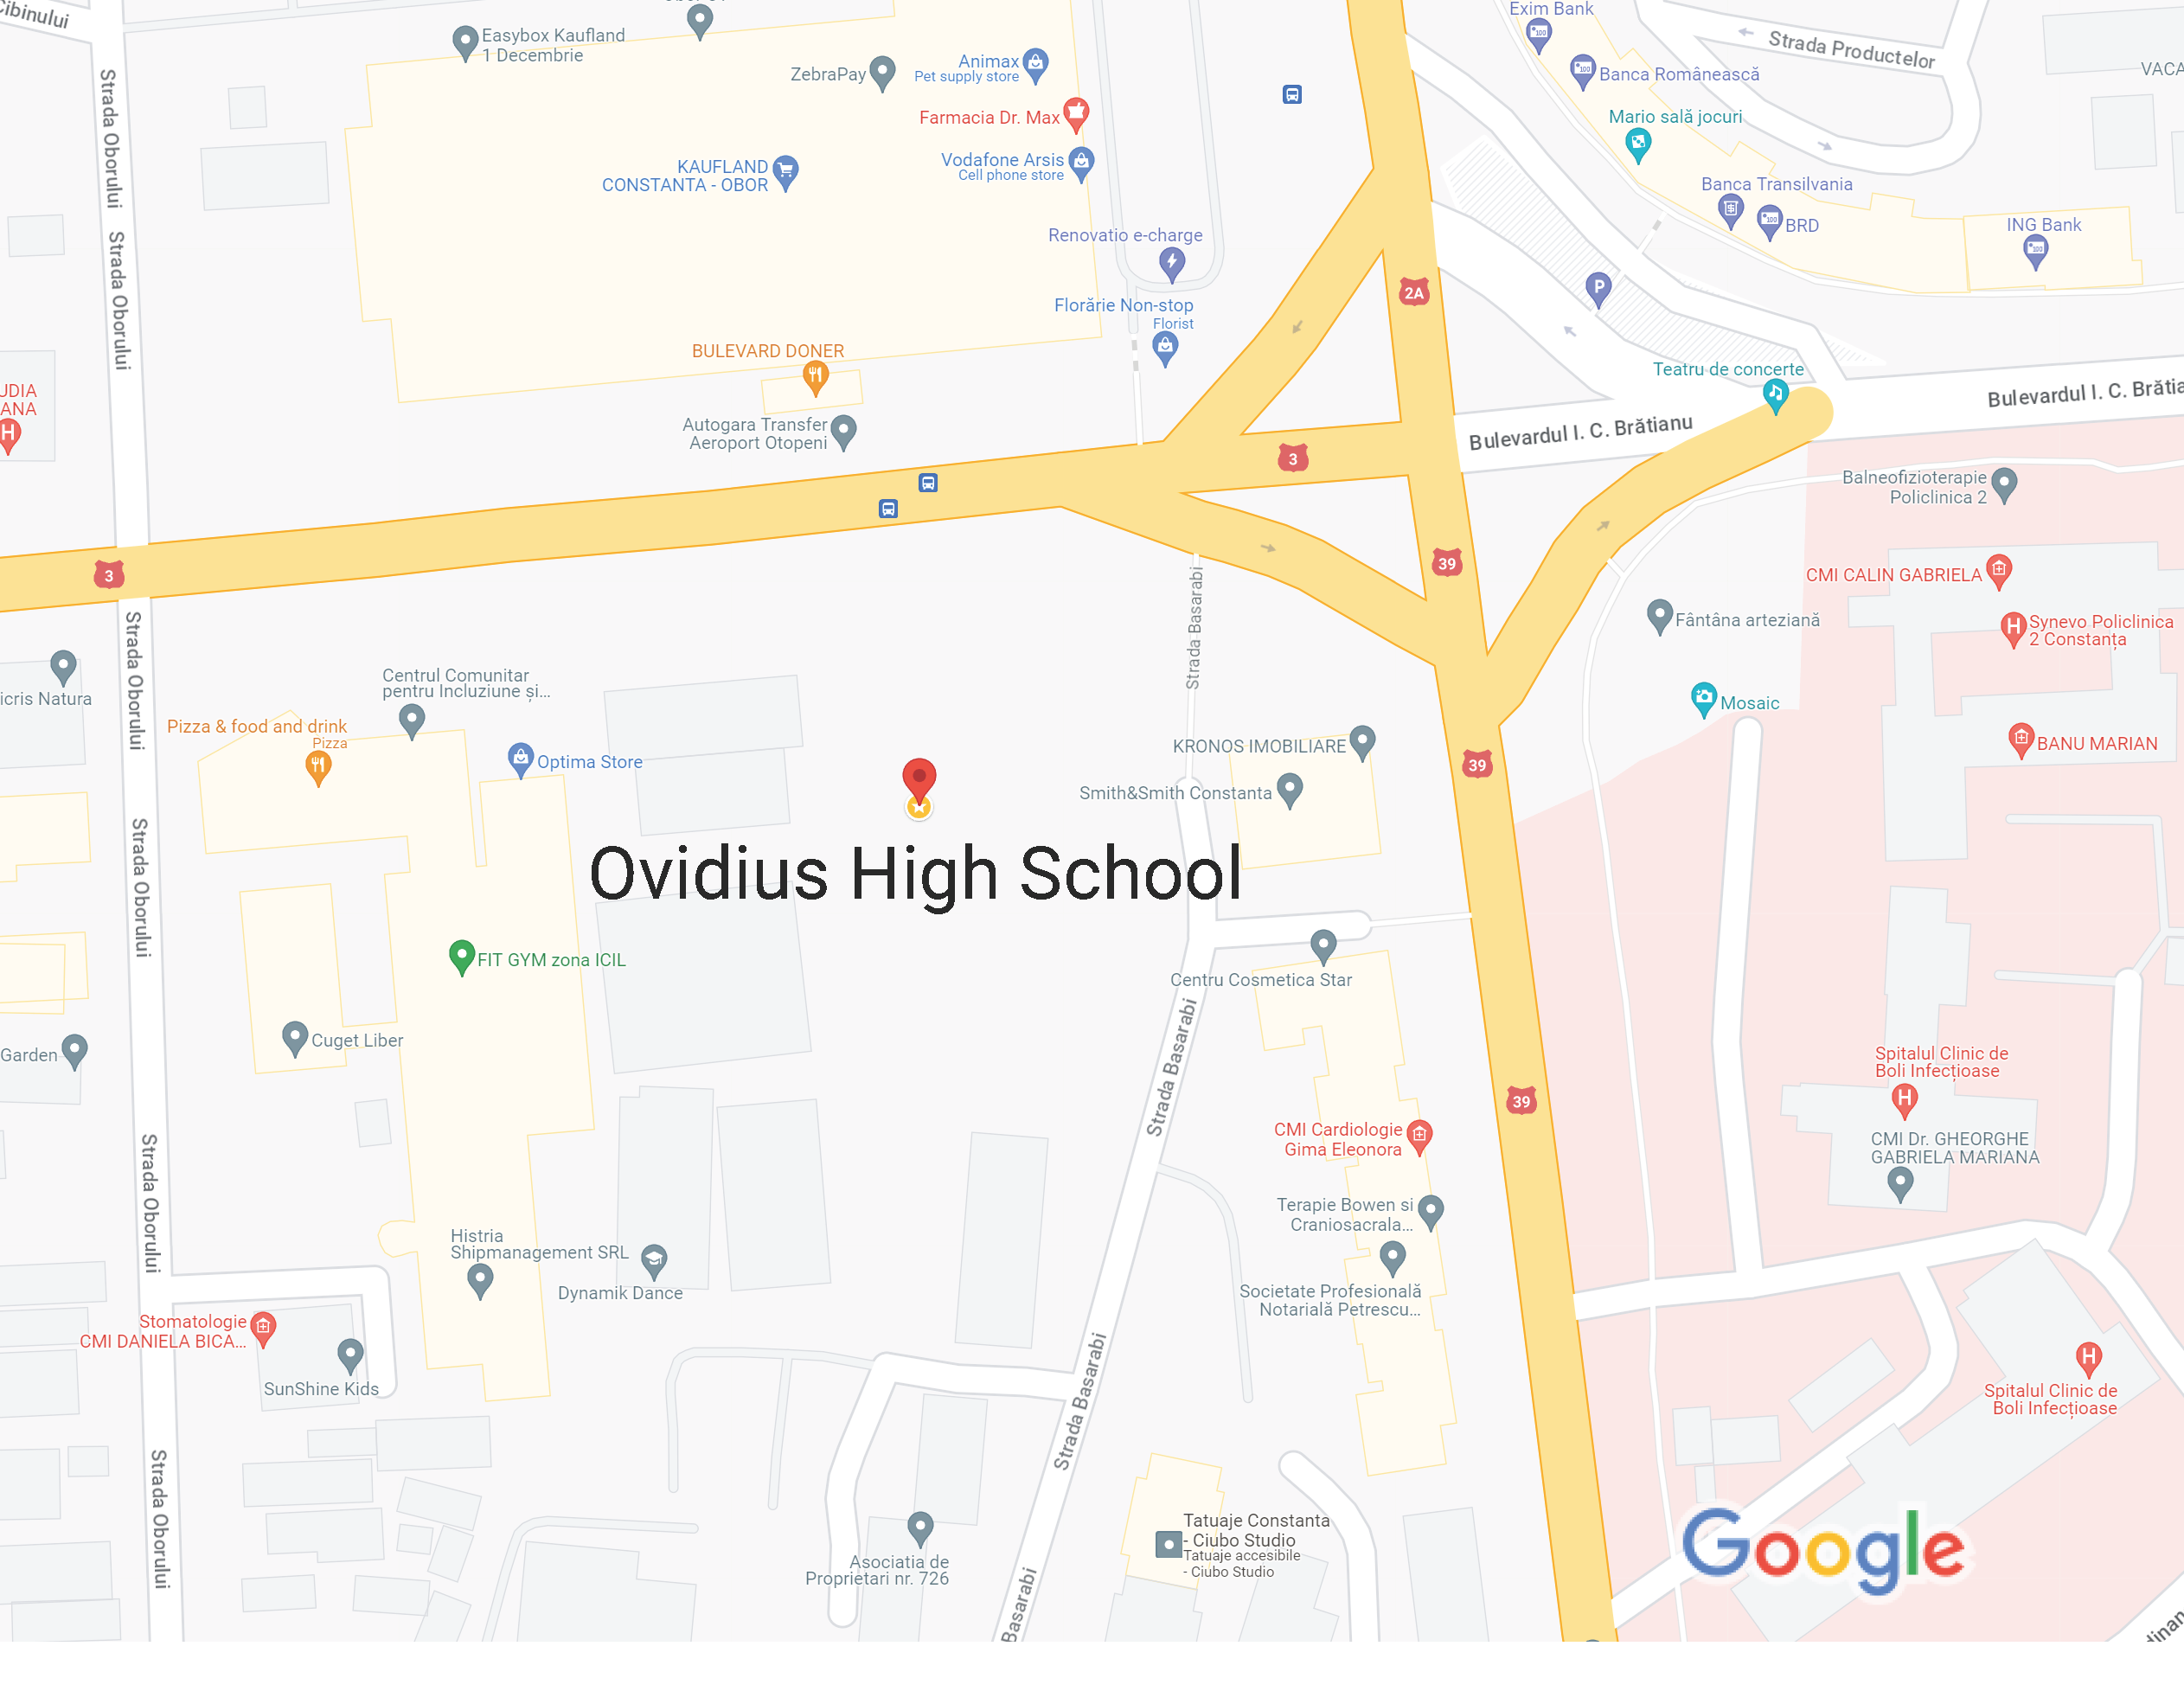 Liceul Ovidius